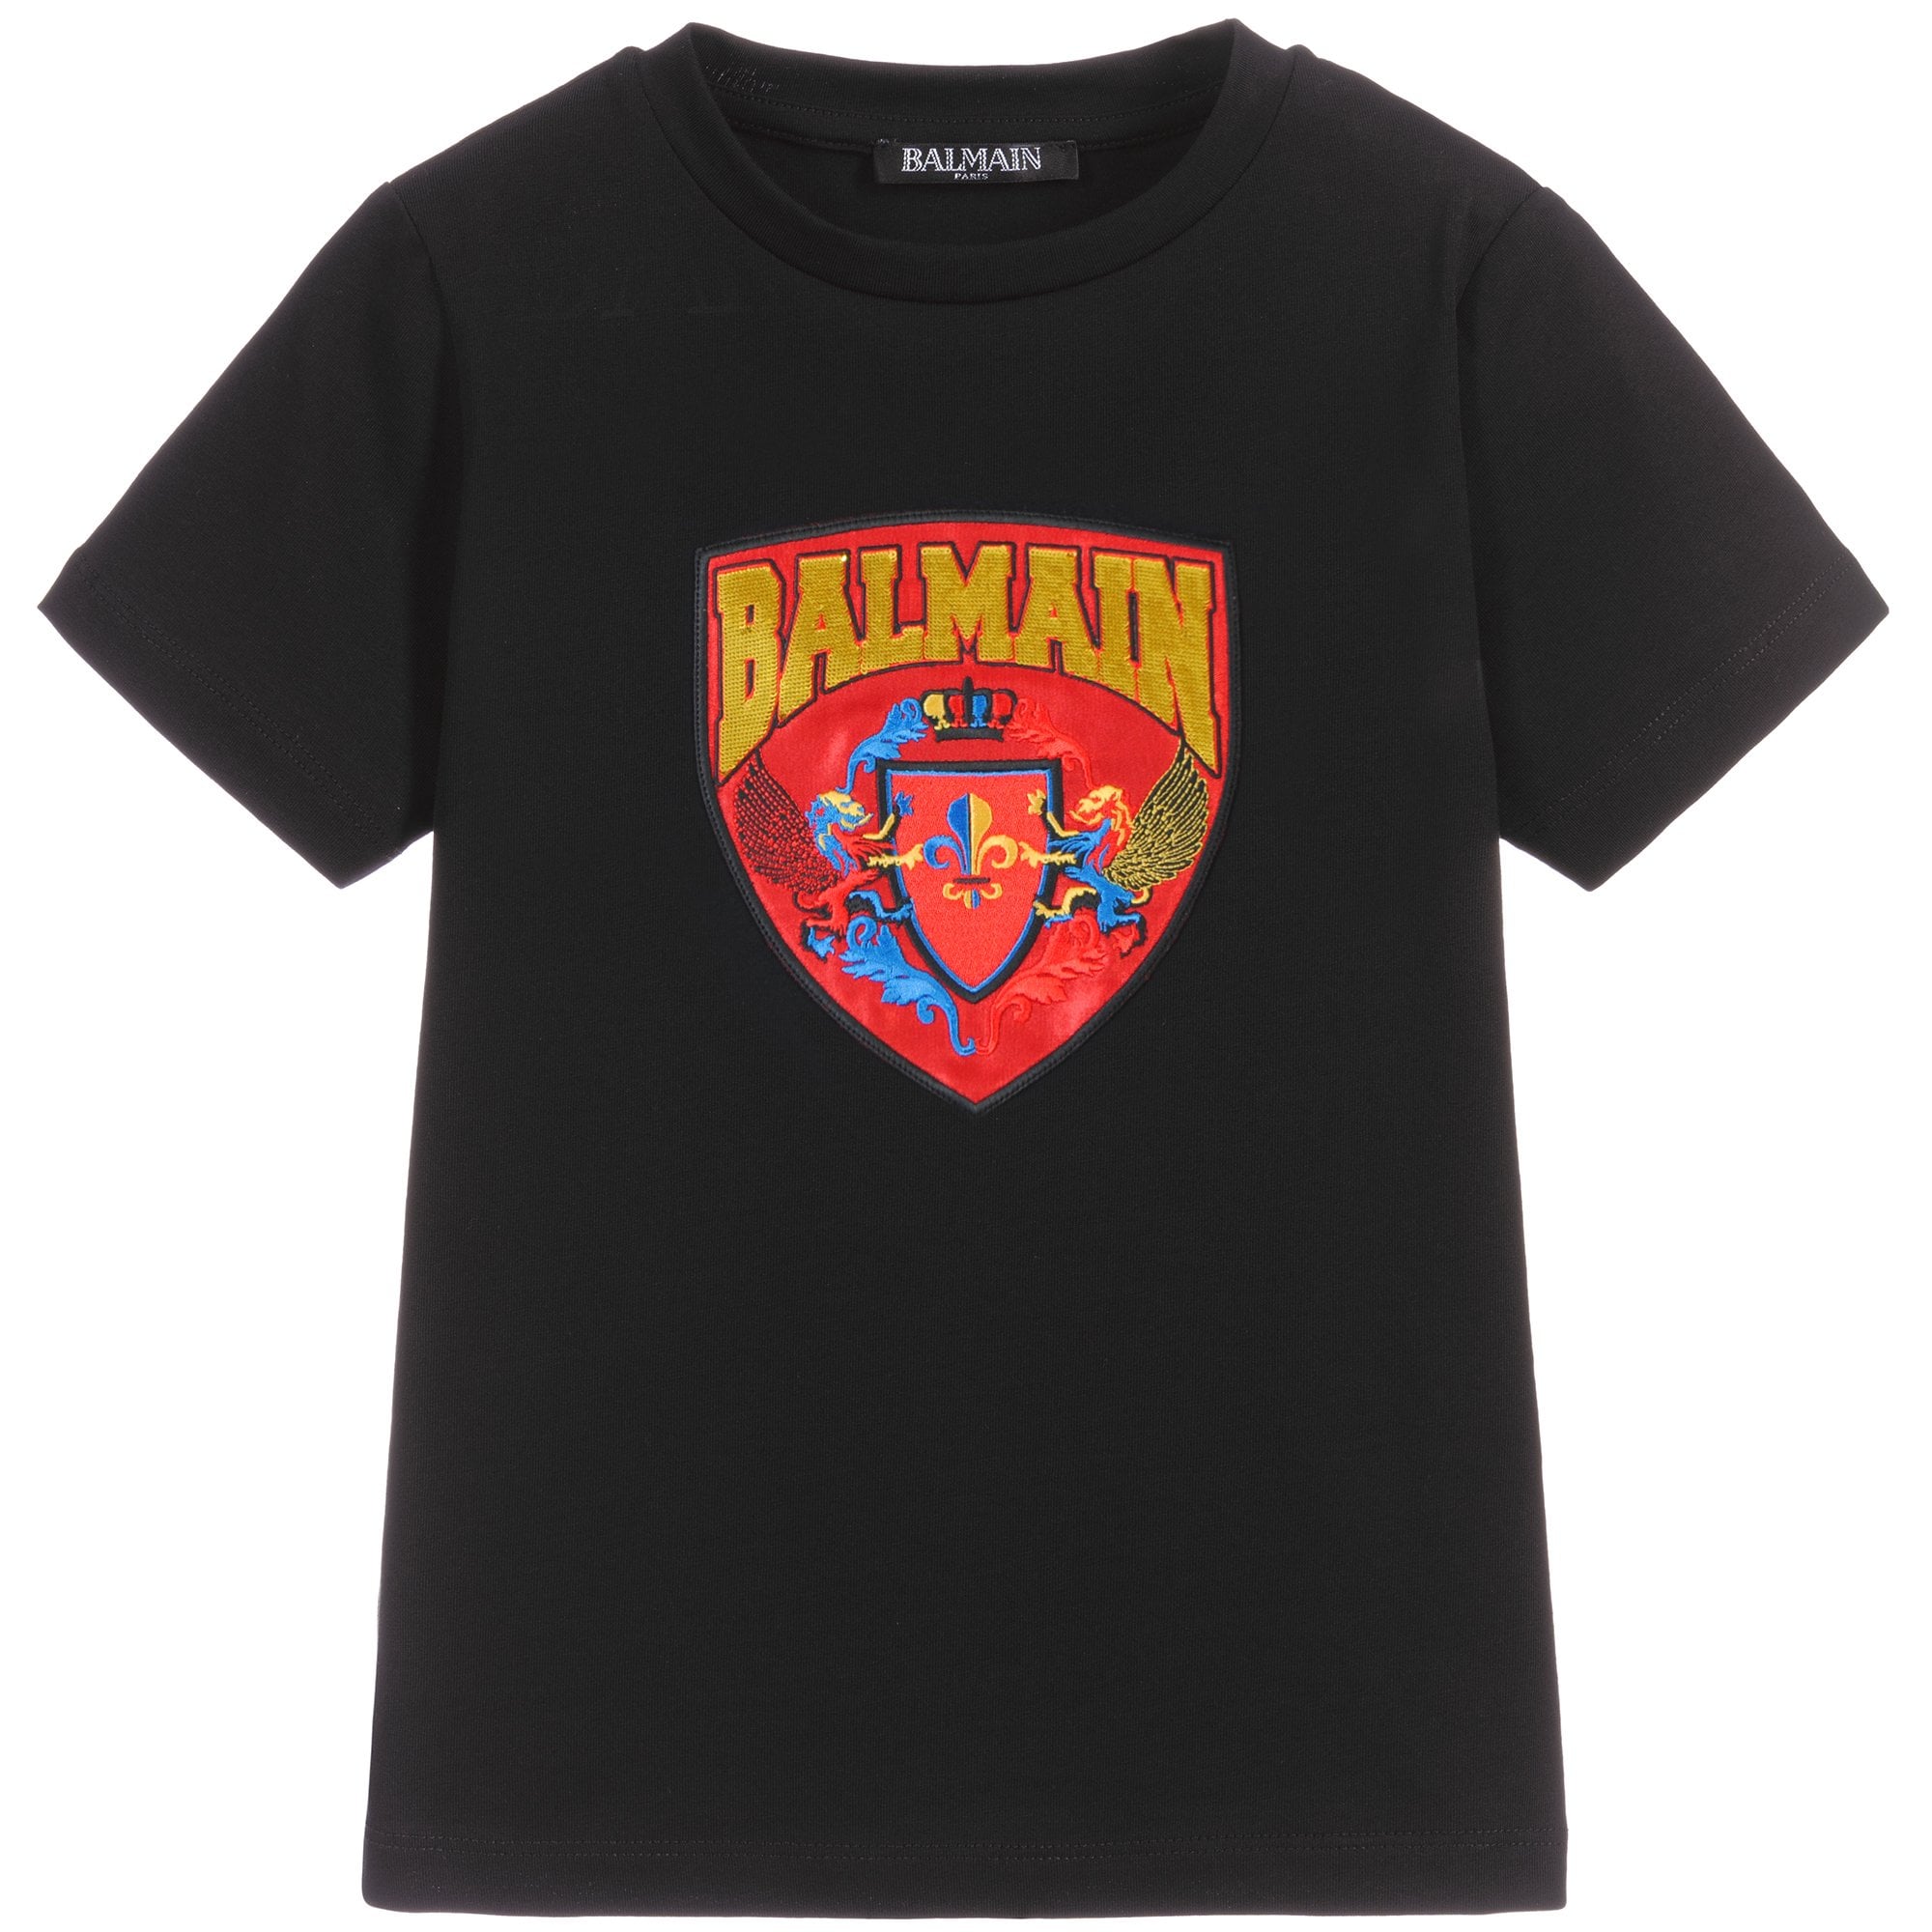 Balmain Boys Graphic Print T-shirt Black 6Y